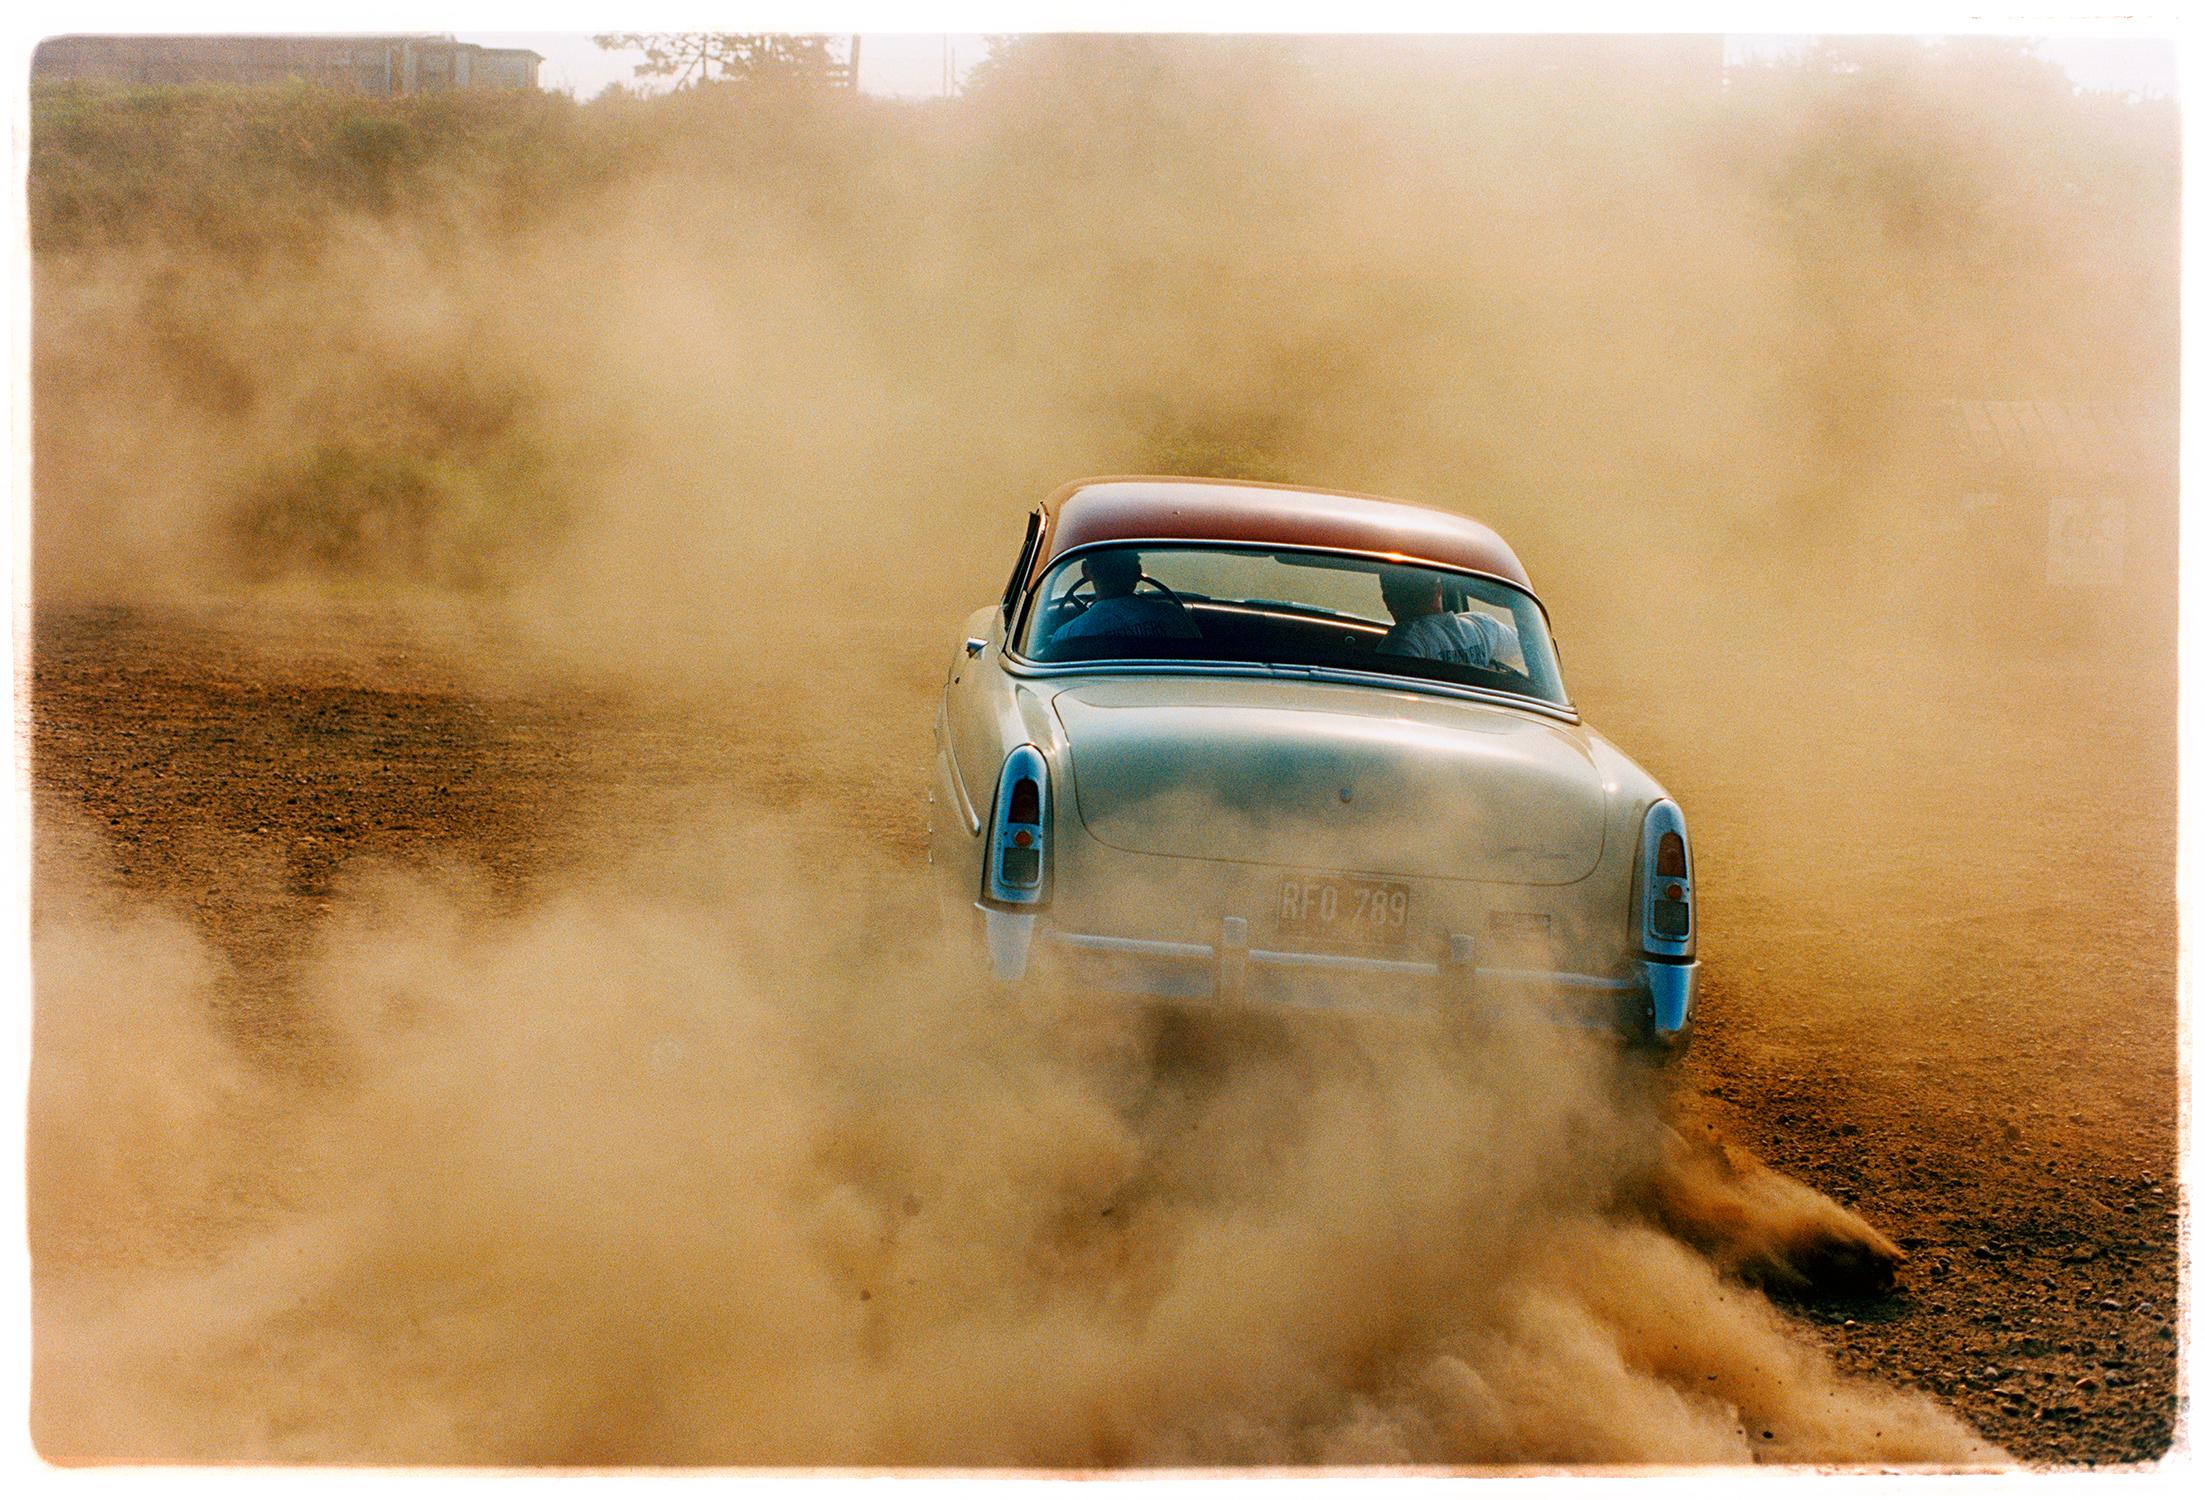 Richard Heeps Color Photograph - Mercury in the Dust, Hemsby, Norfolk - Car on a beach color photography